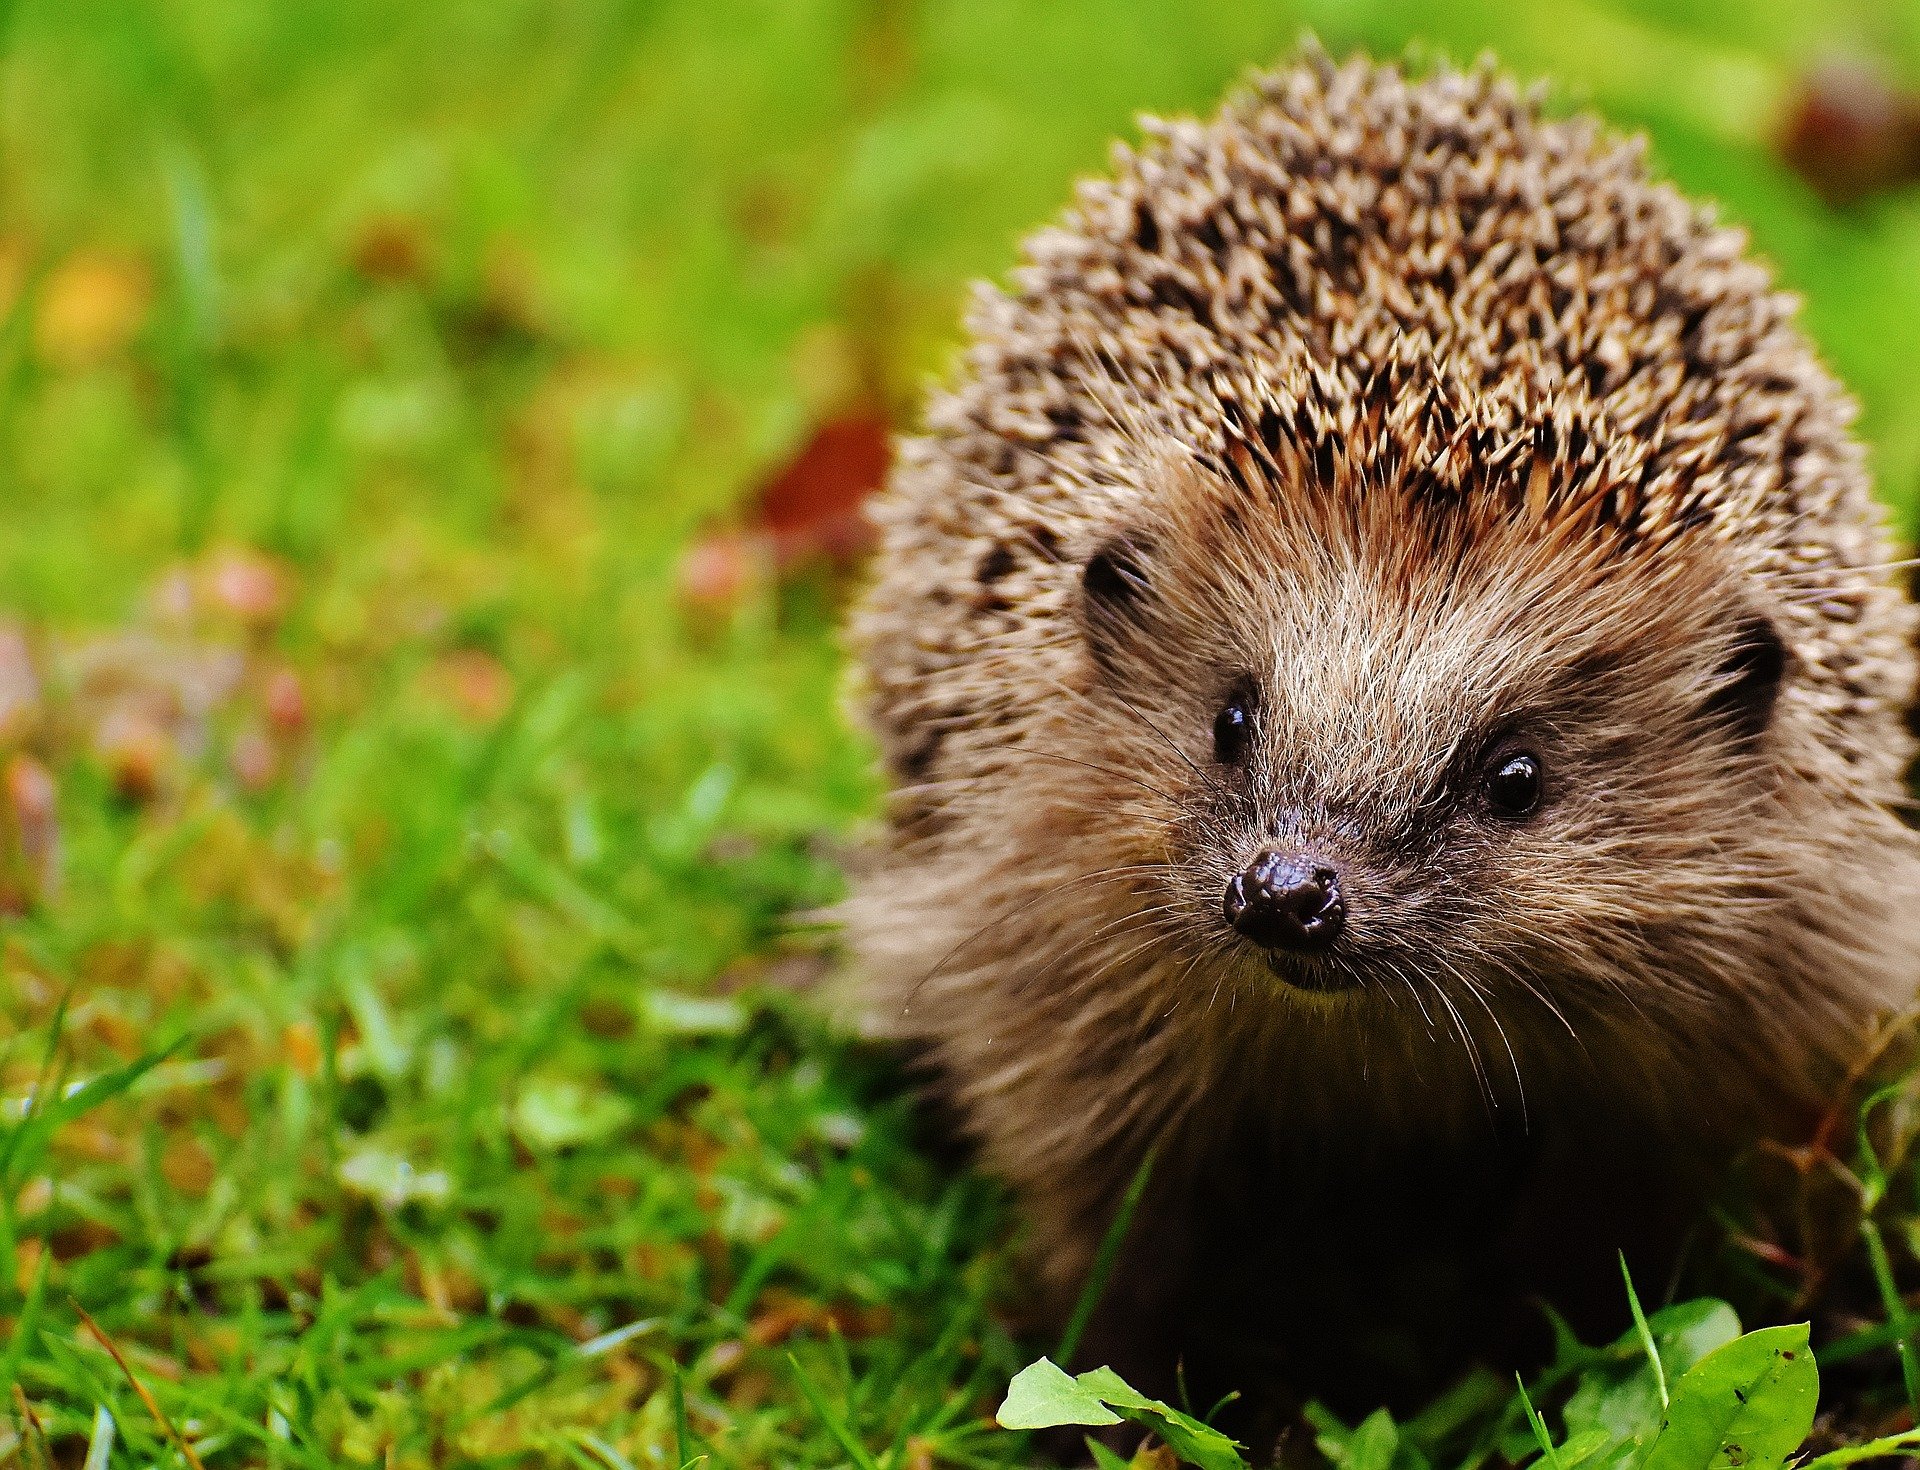 A hedgehog in a field